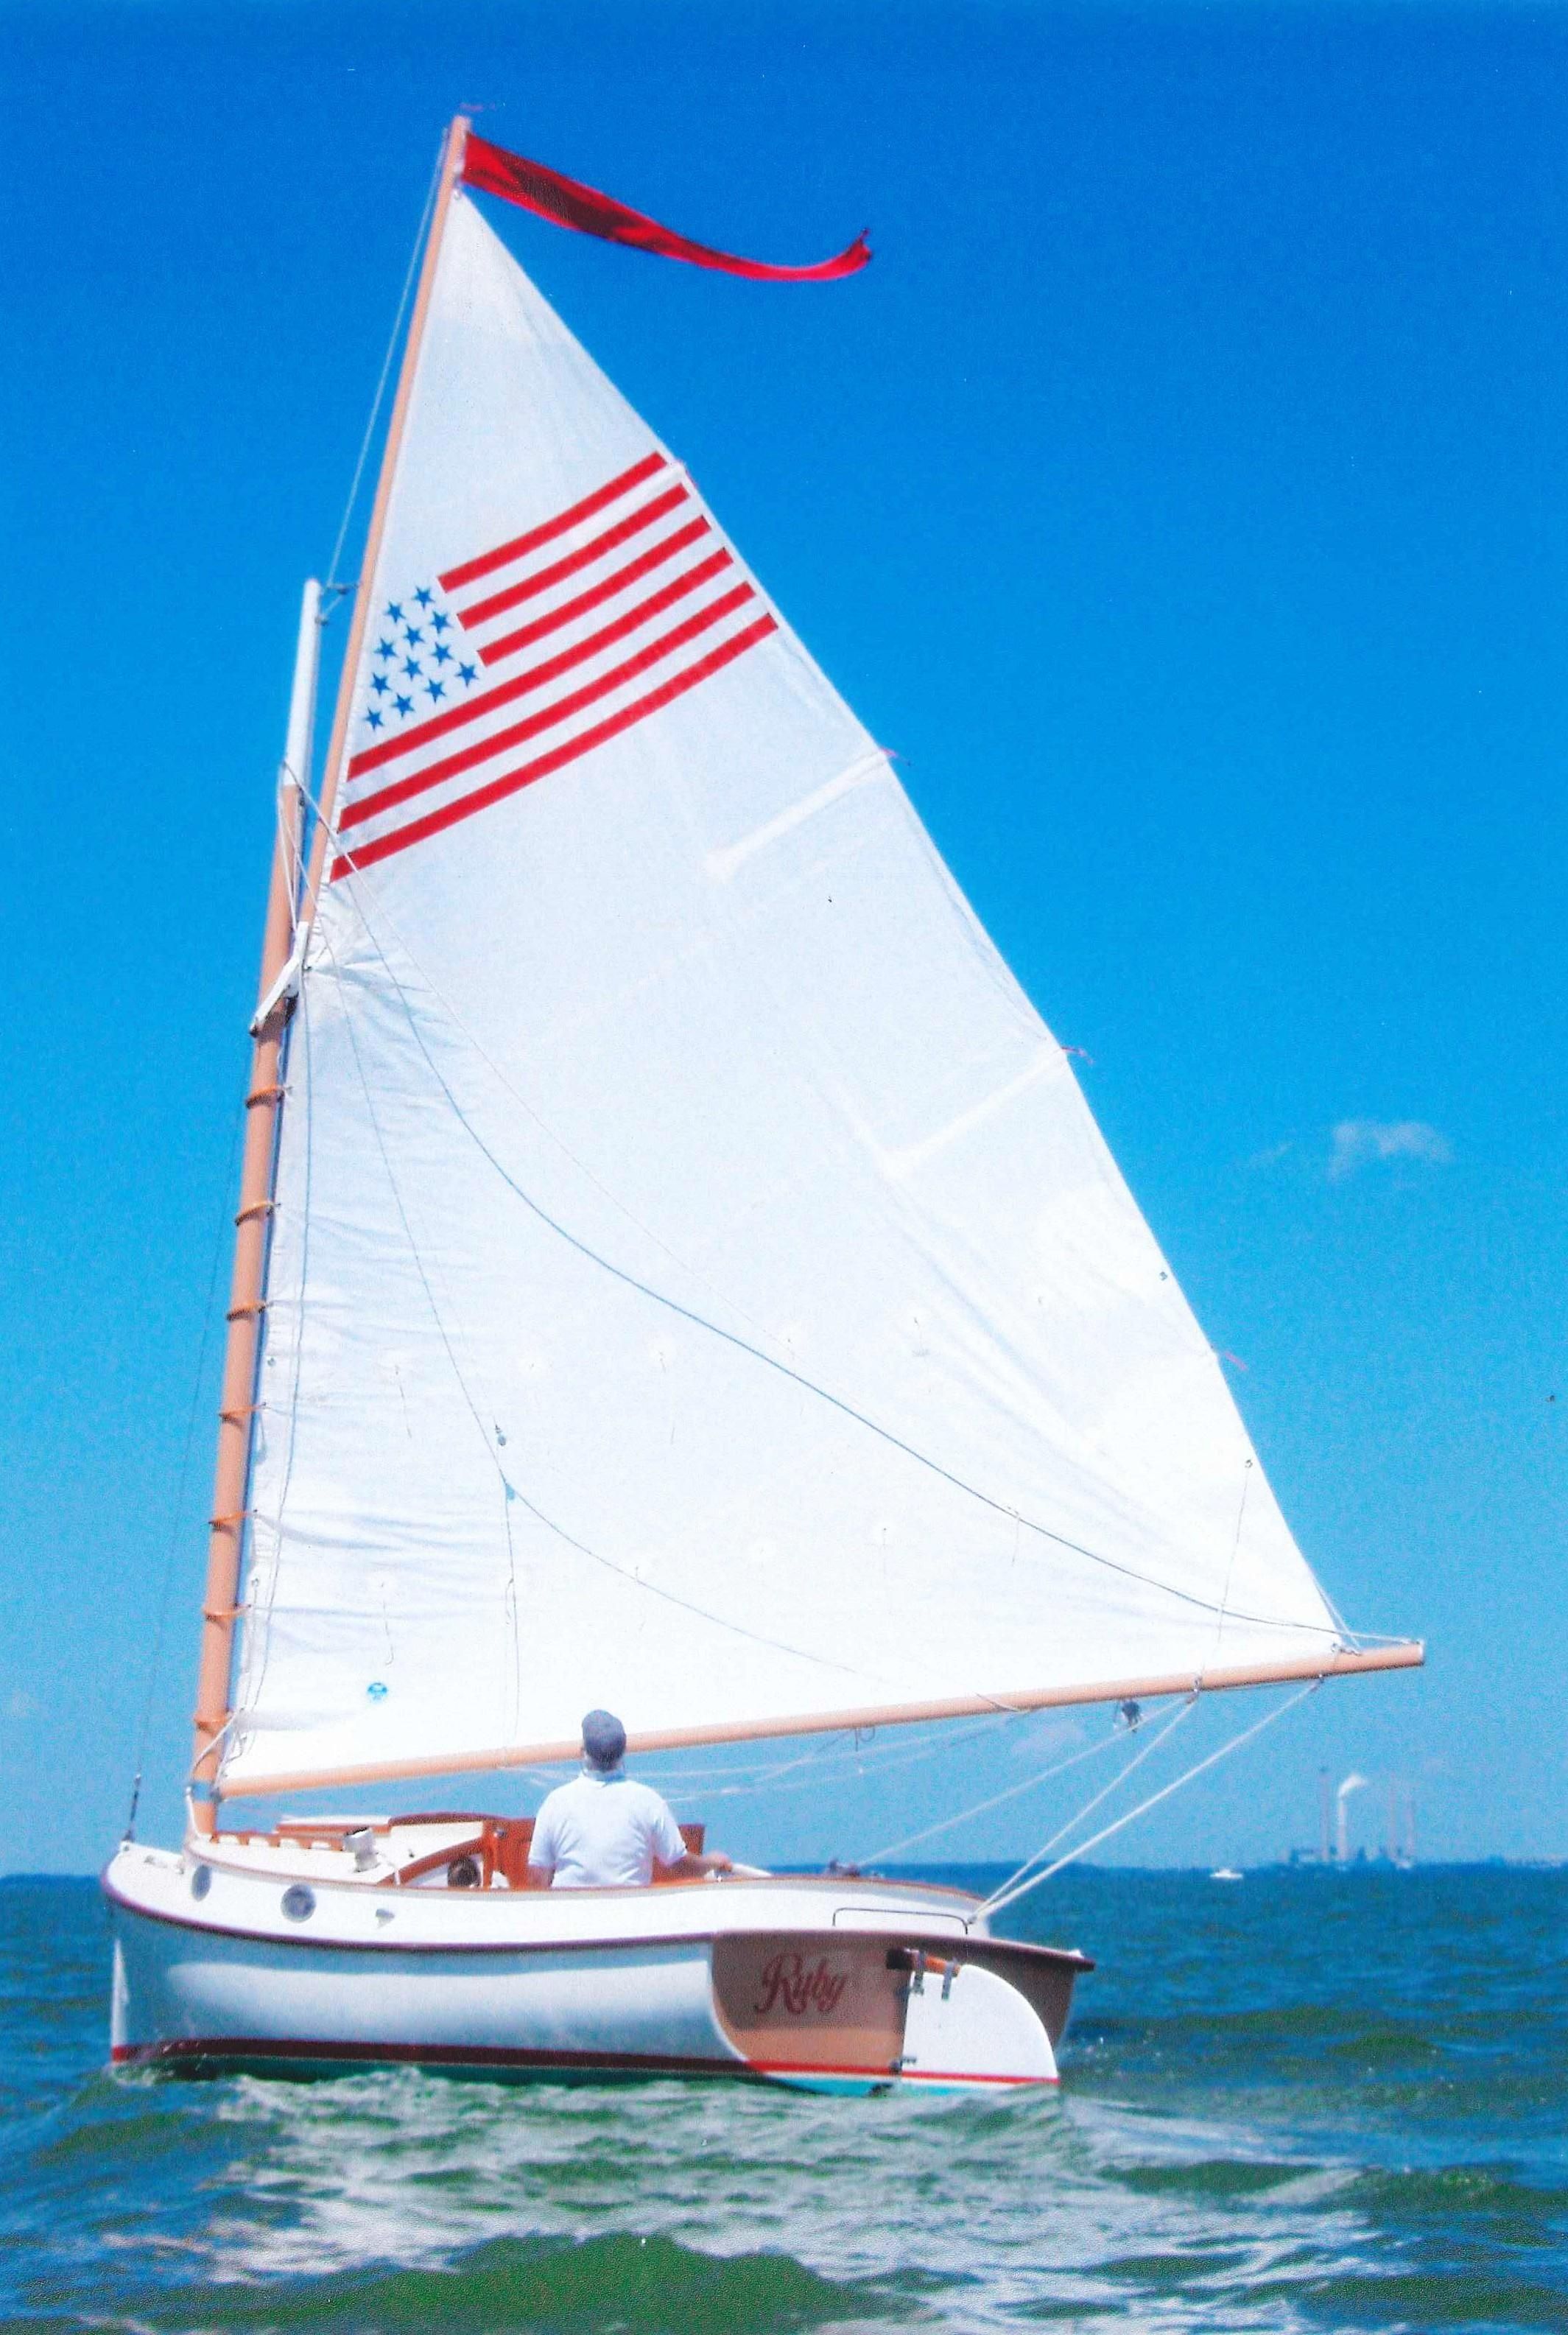 1980 Herreshoff 18' Cat Boat Daysailer for sale - YachtWorld